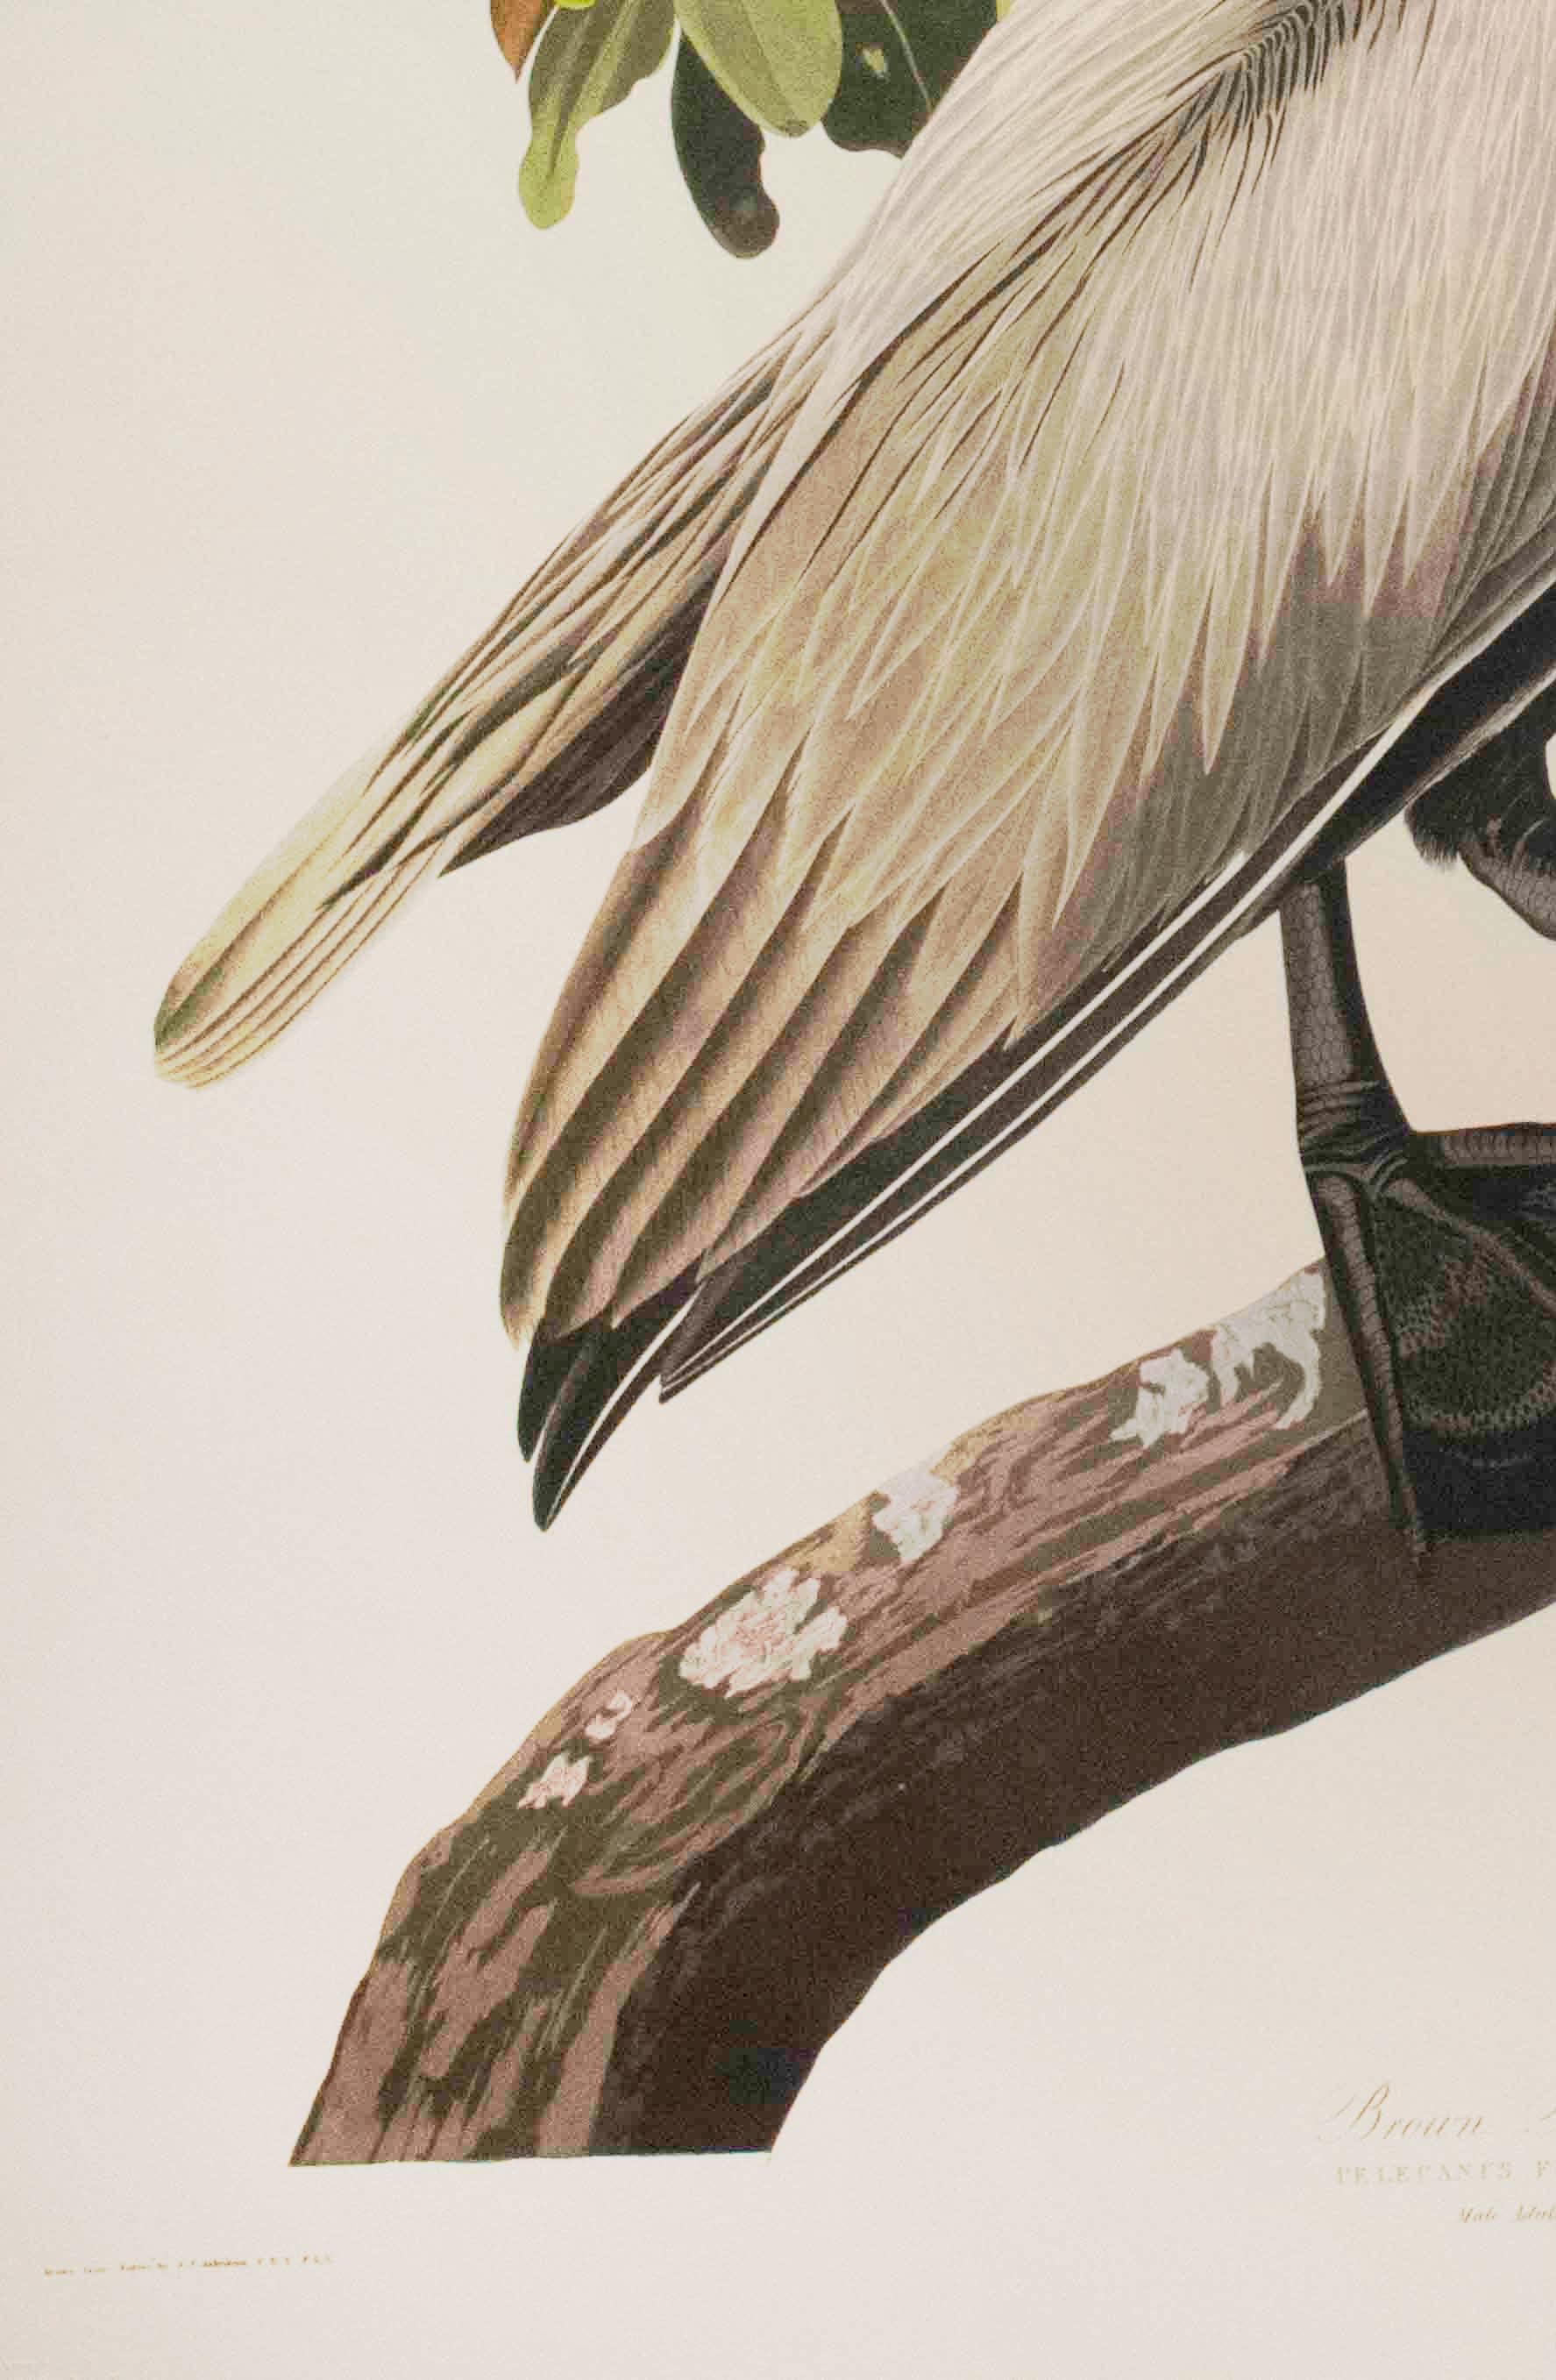 Brauner Pelikan in Braun, Auflage Pl. 251 (Naturalismus), Print, von After John James Audubon